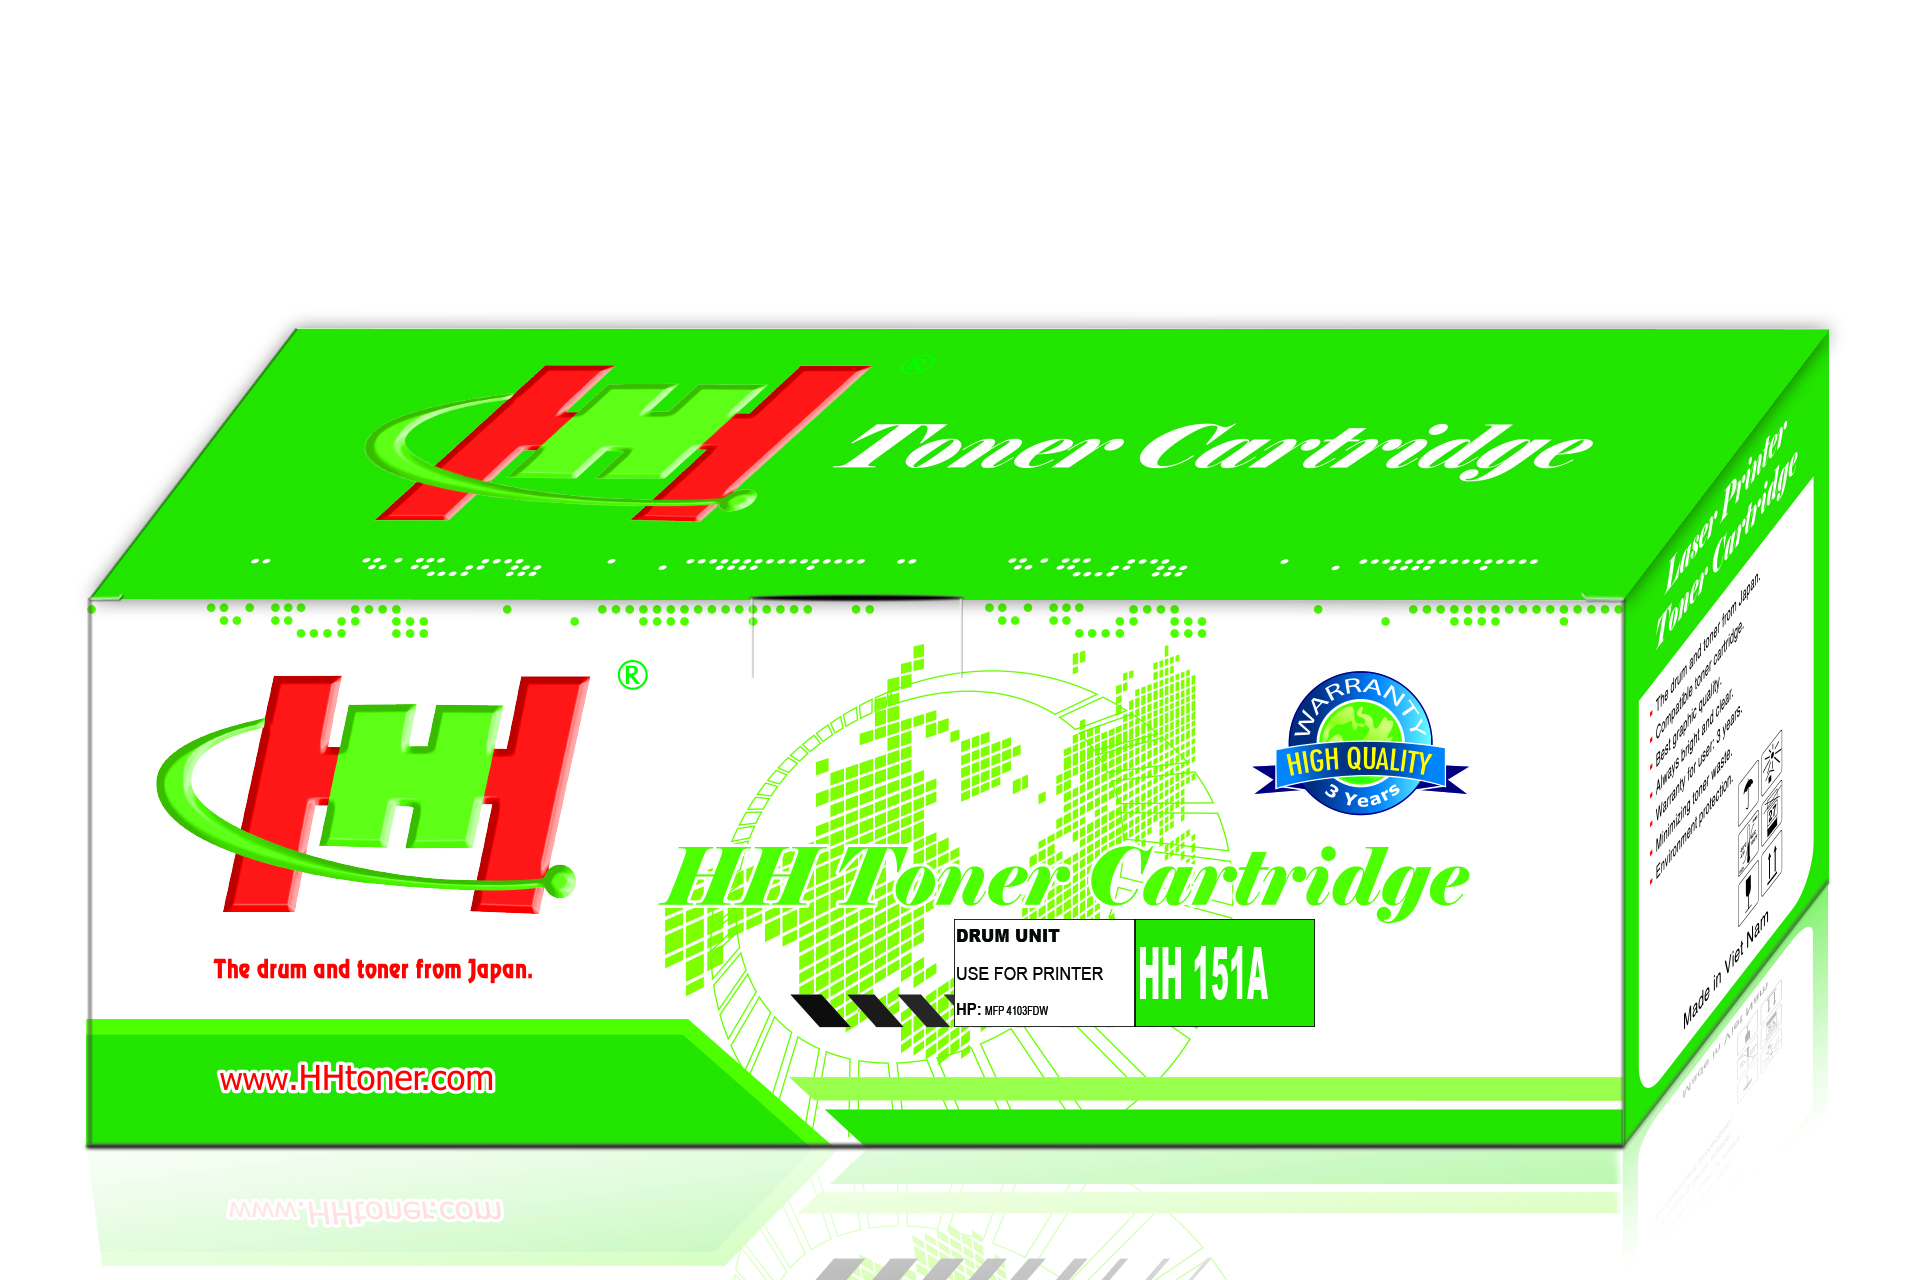 Mực Máy in HP LaserJet Pro MFP 4103fdn Printer (2Z628A) thương hiệu HH